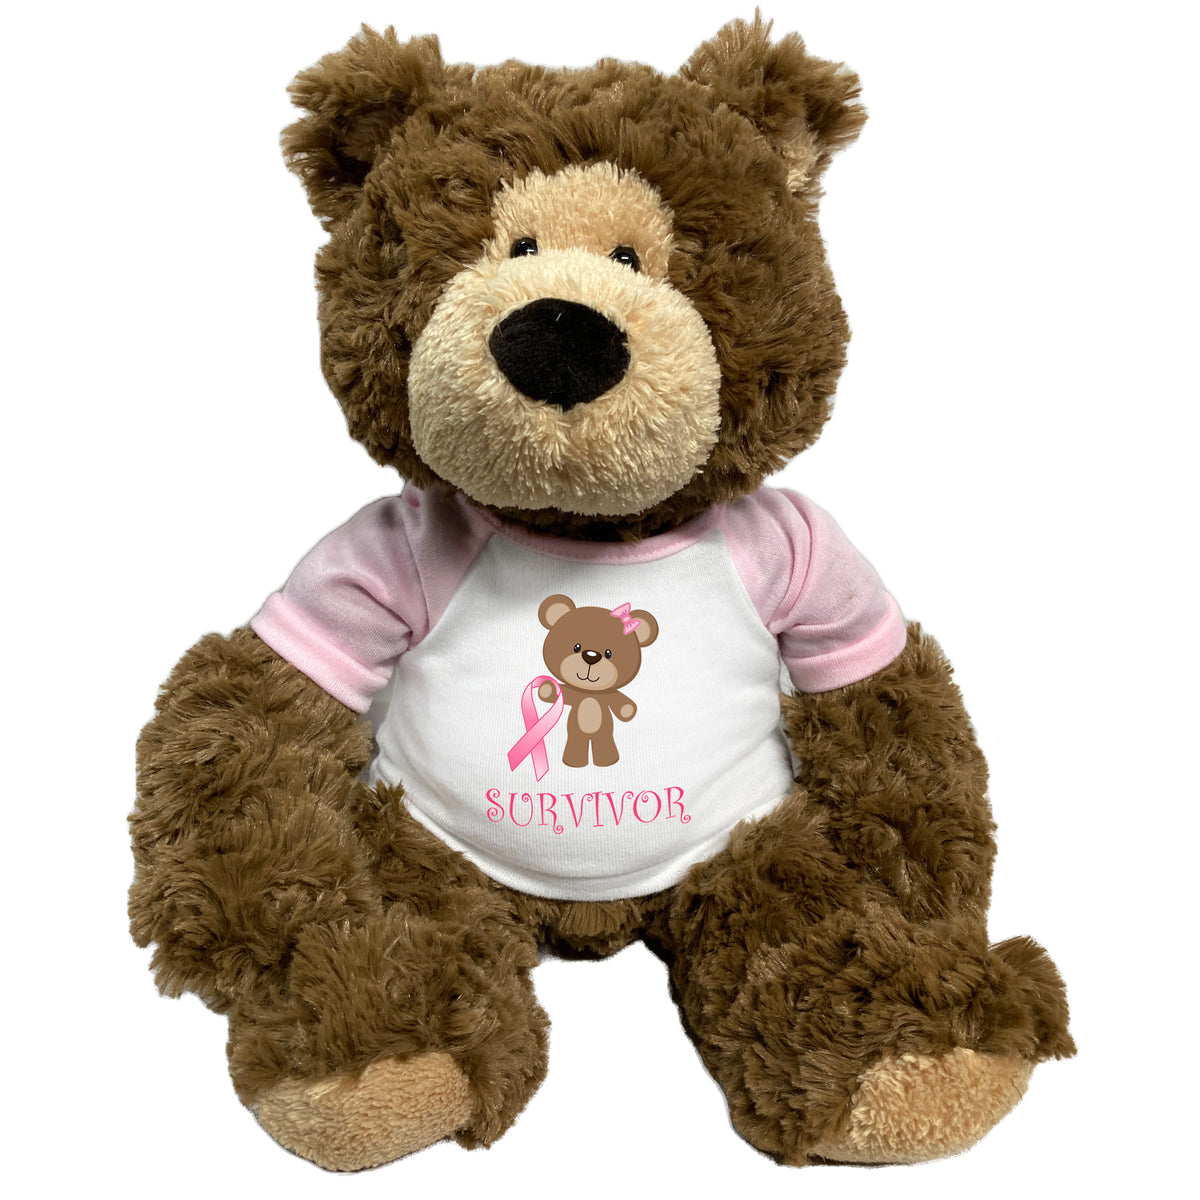 Breast Cancer Support Teddy Bear - Personalized 14 Inch Bear Hugs - Survivor Design